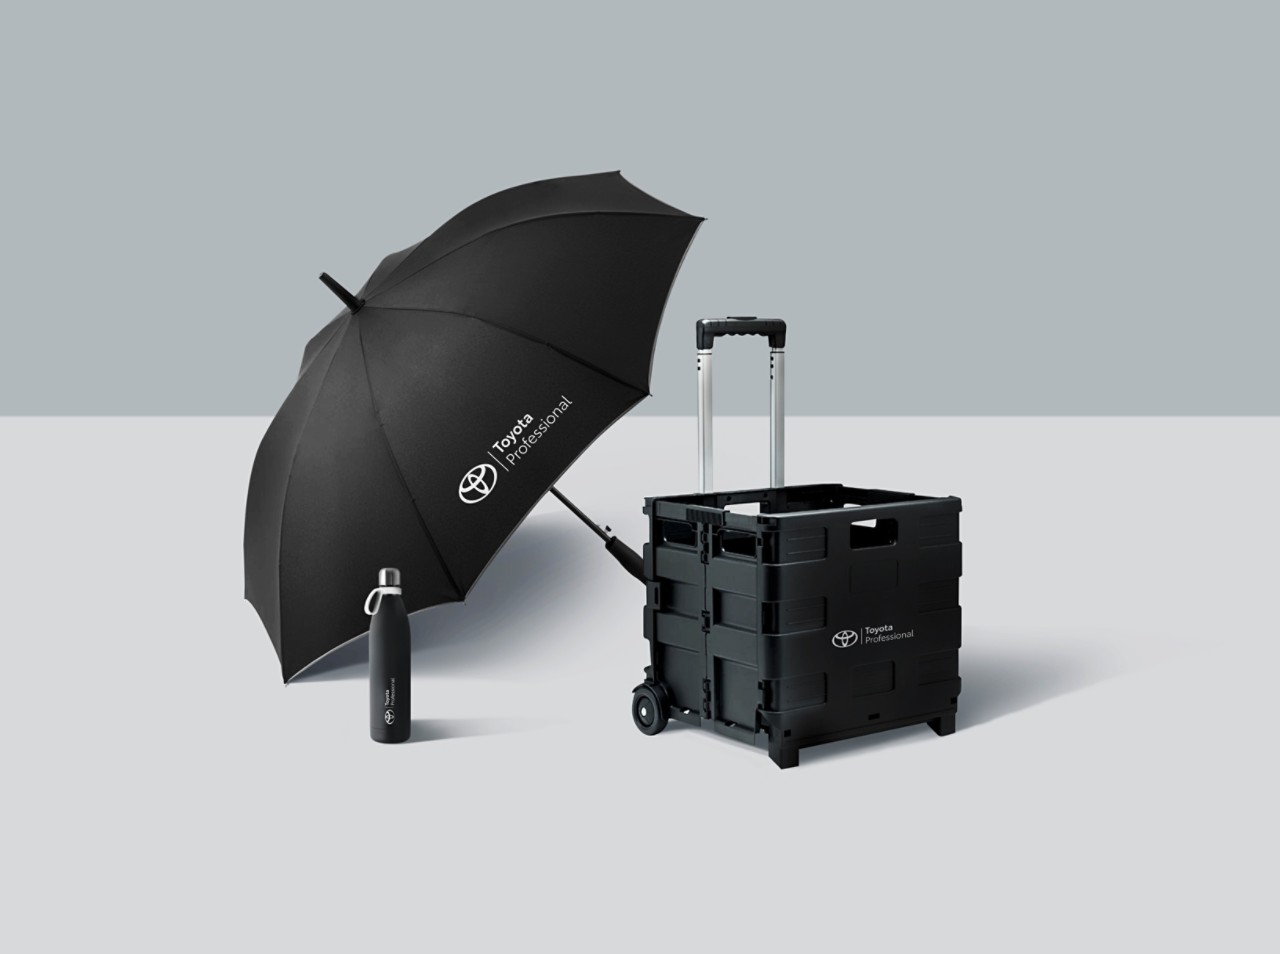 Toyota Professional zīmola lietussargs, ūdens pudele un ratiņi